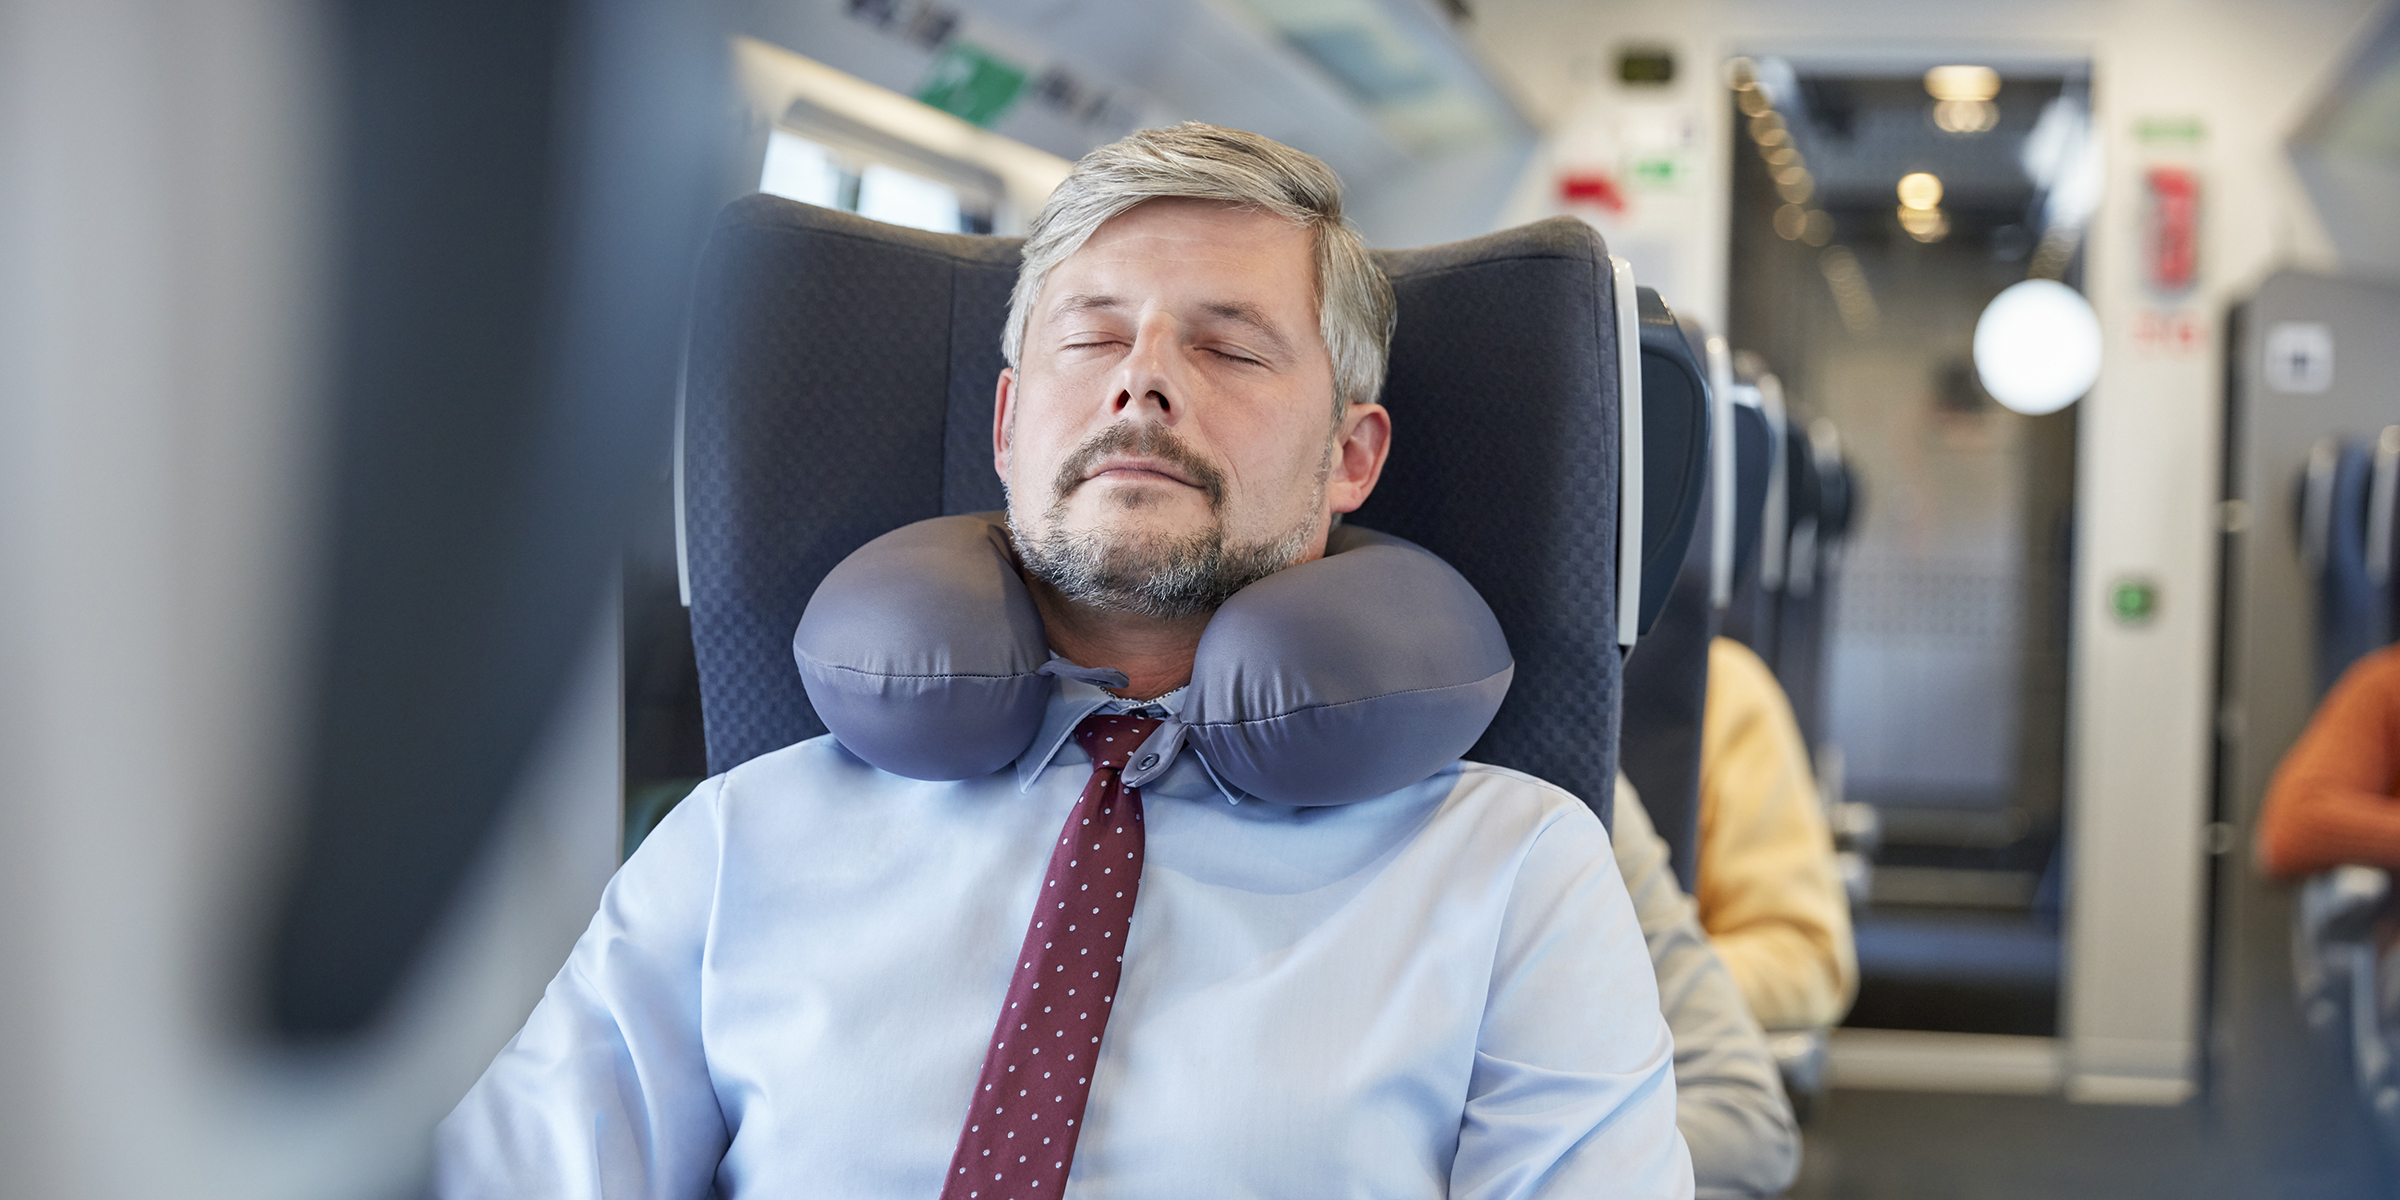 6 Best Travel Neck Pillow For Long Flights